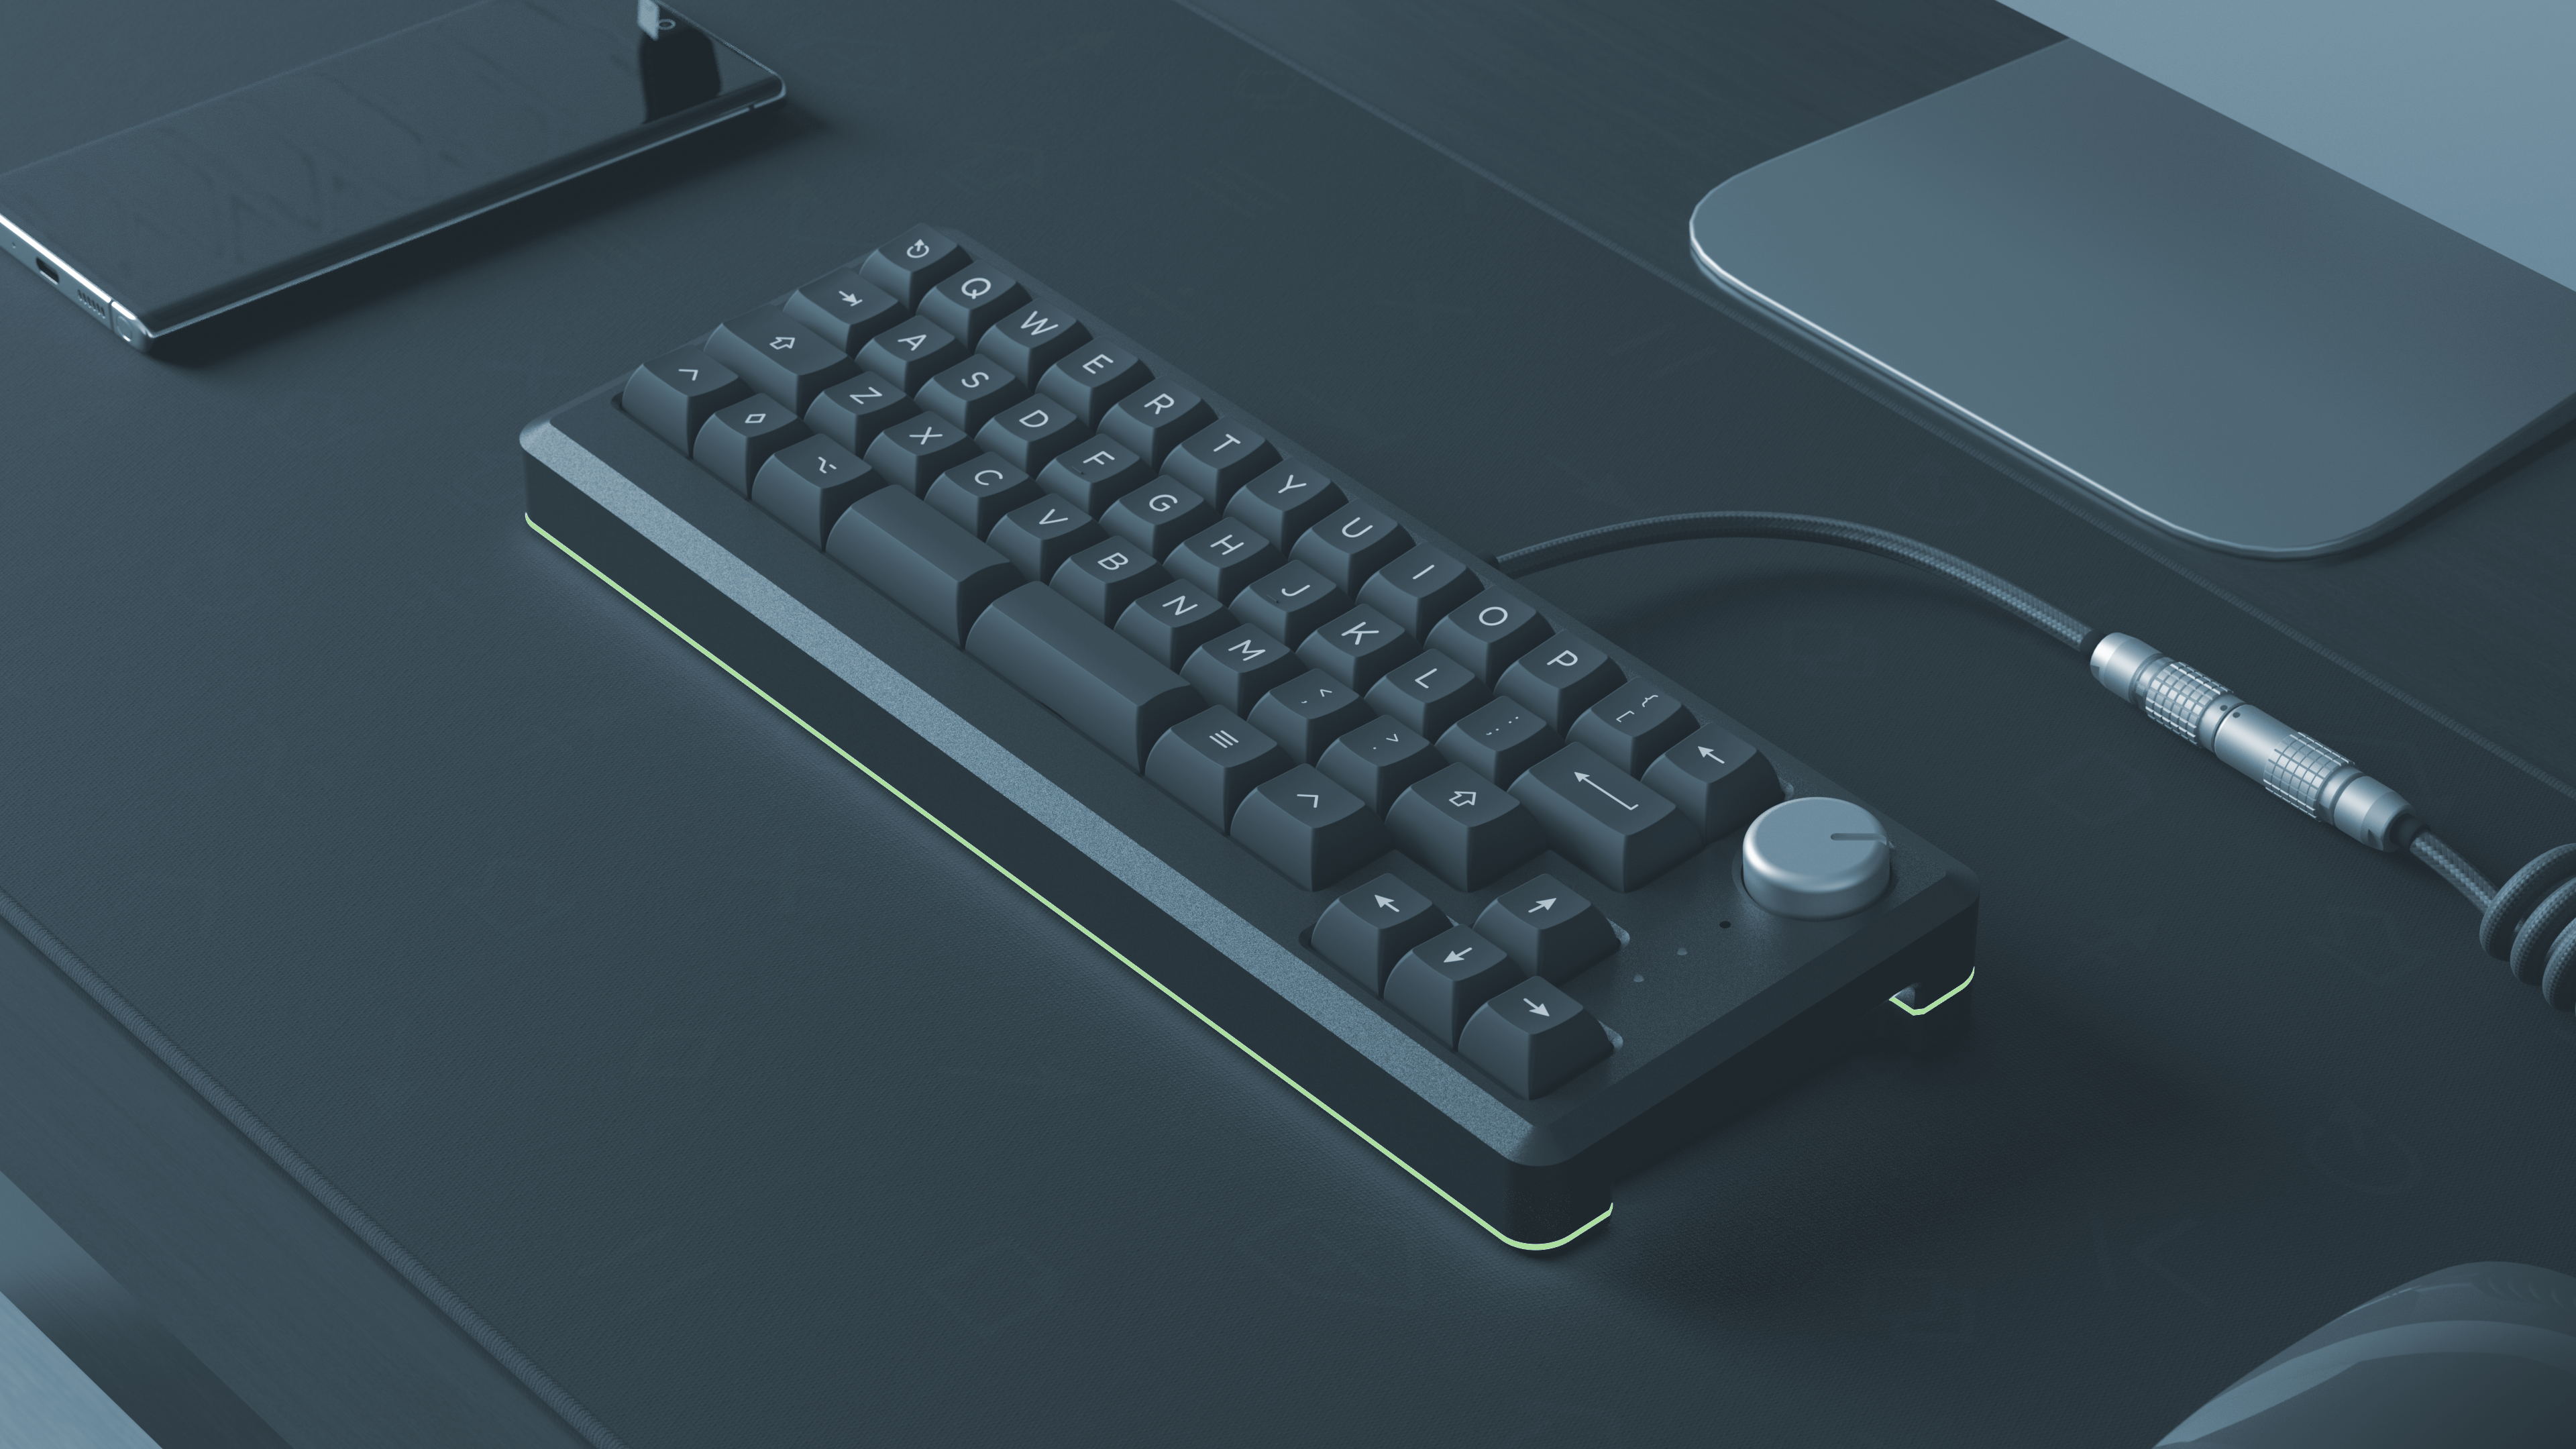 General 3840x2160 keyboards mechanical keyboard smartphone minimalism technology digital art CGI